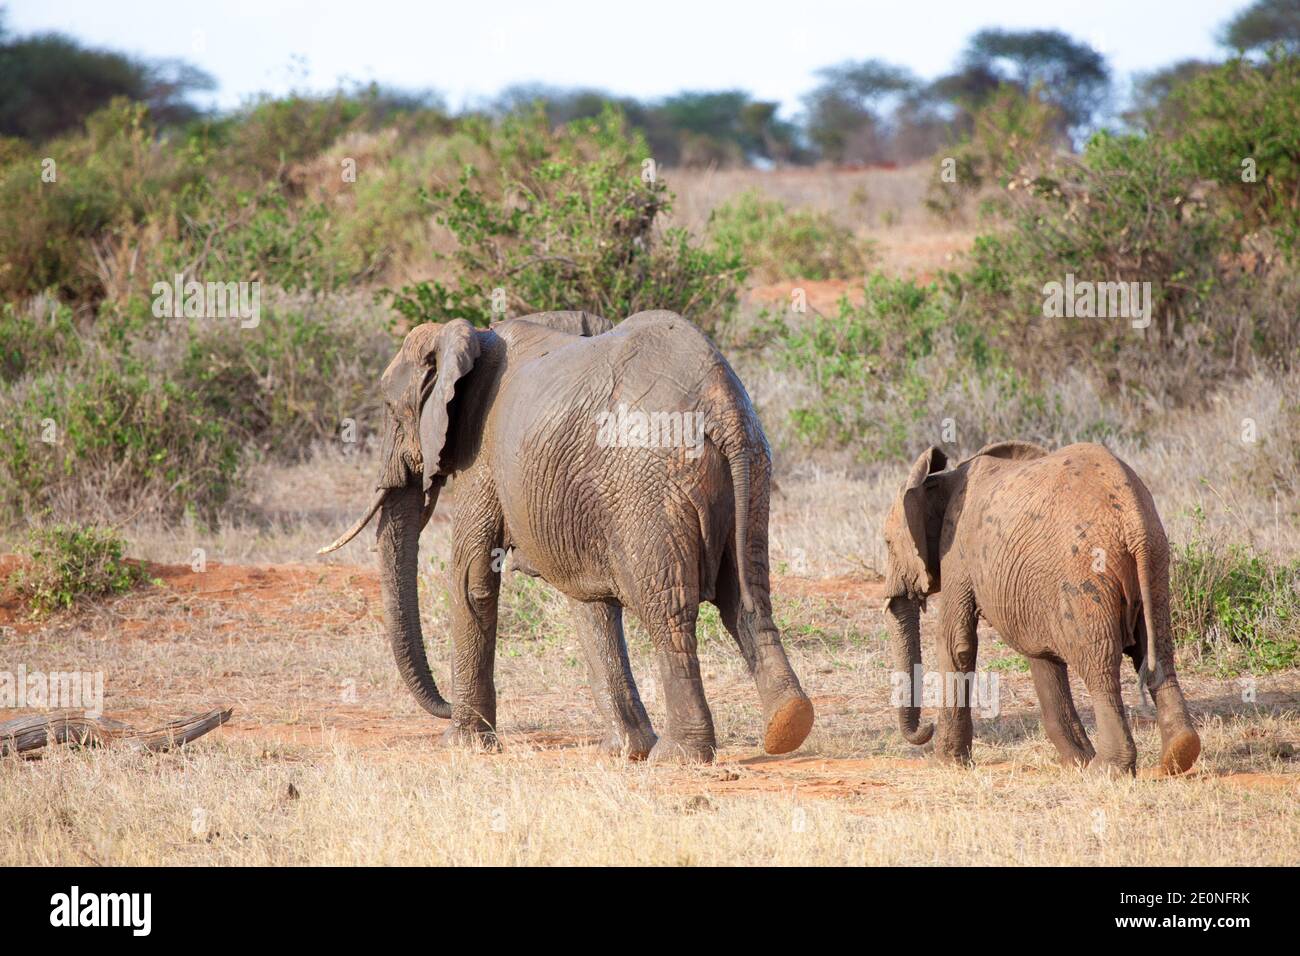 Elephants walking in the scenery of the savannah in Kenya. Stock Photo